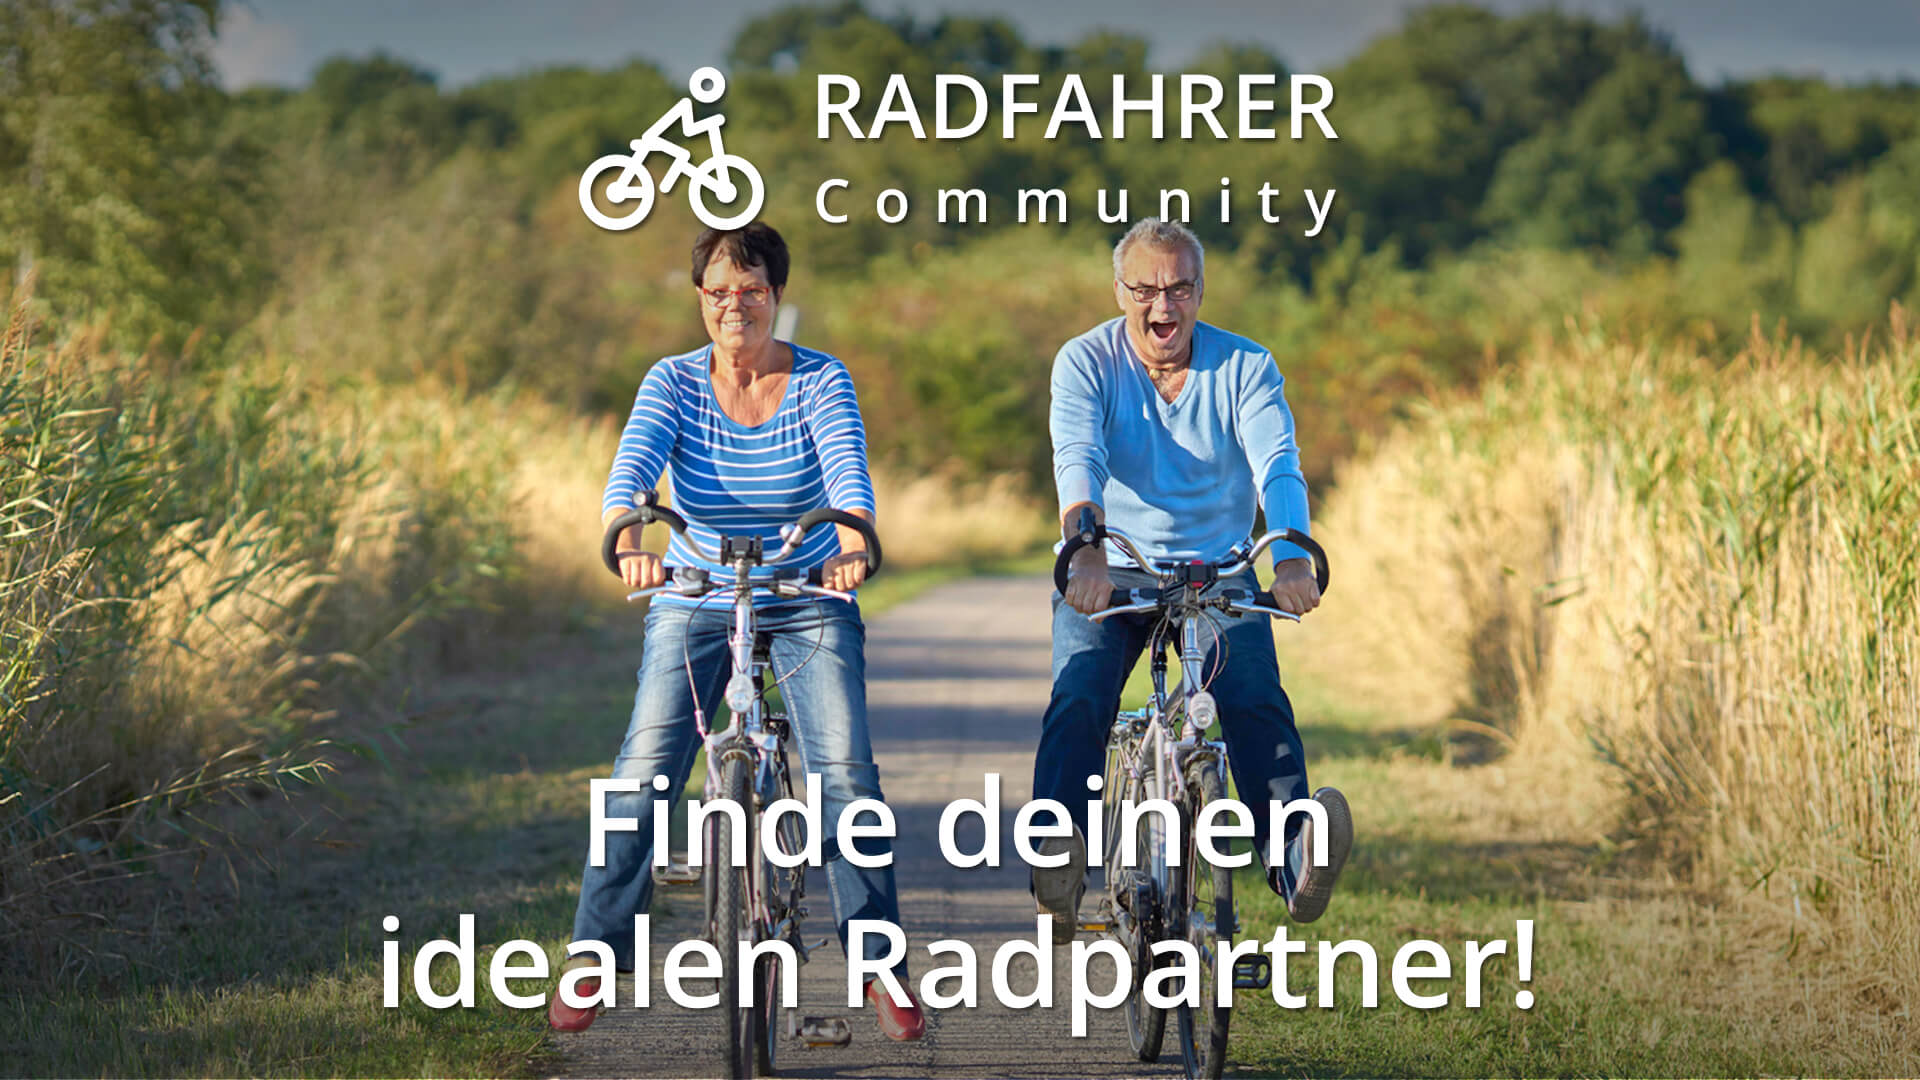 (c) Radfahrer.community